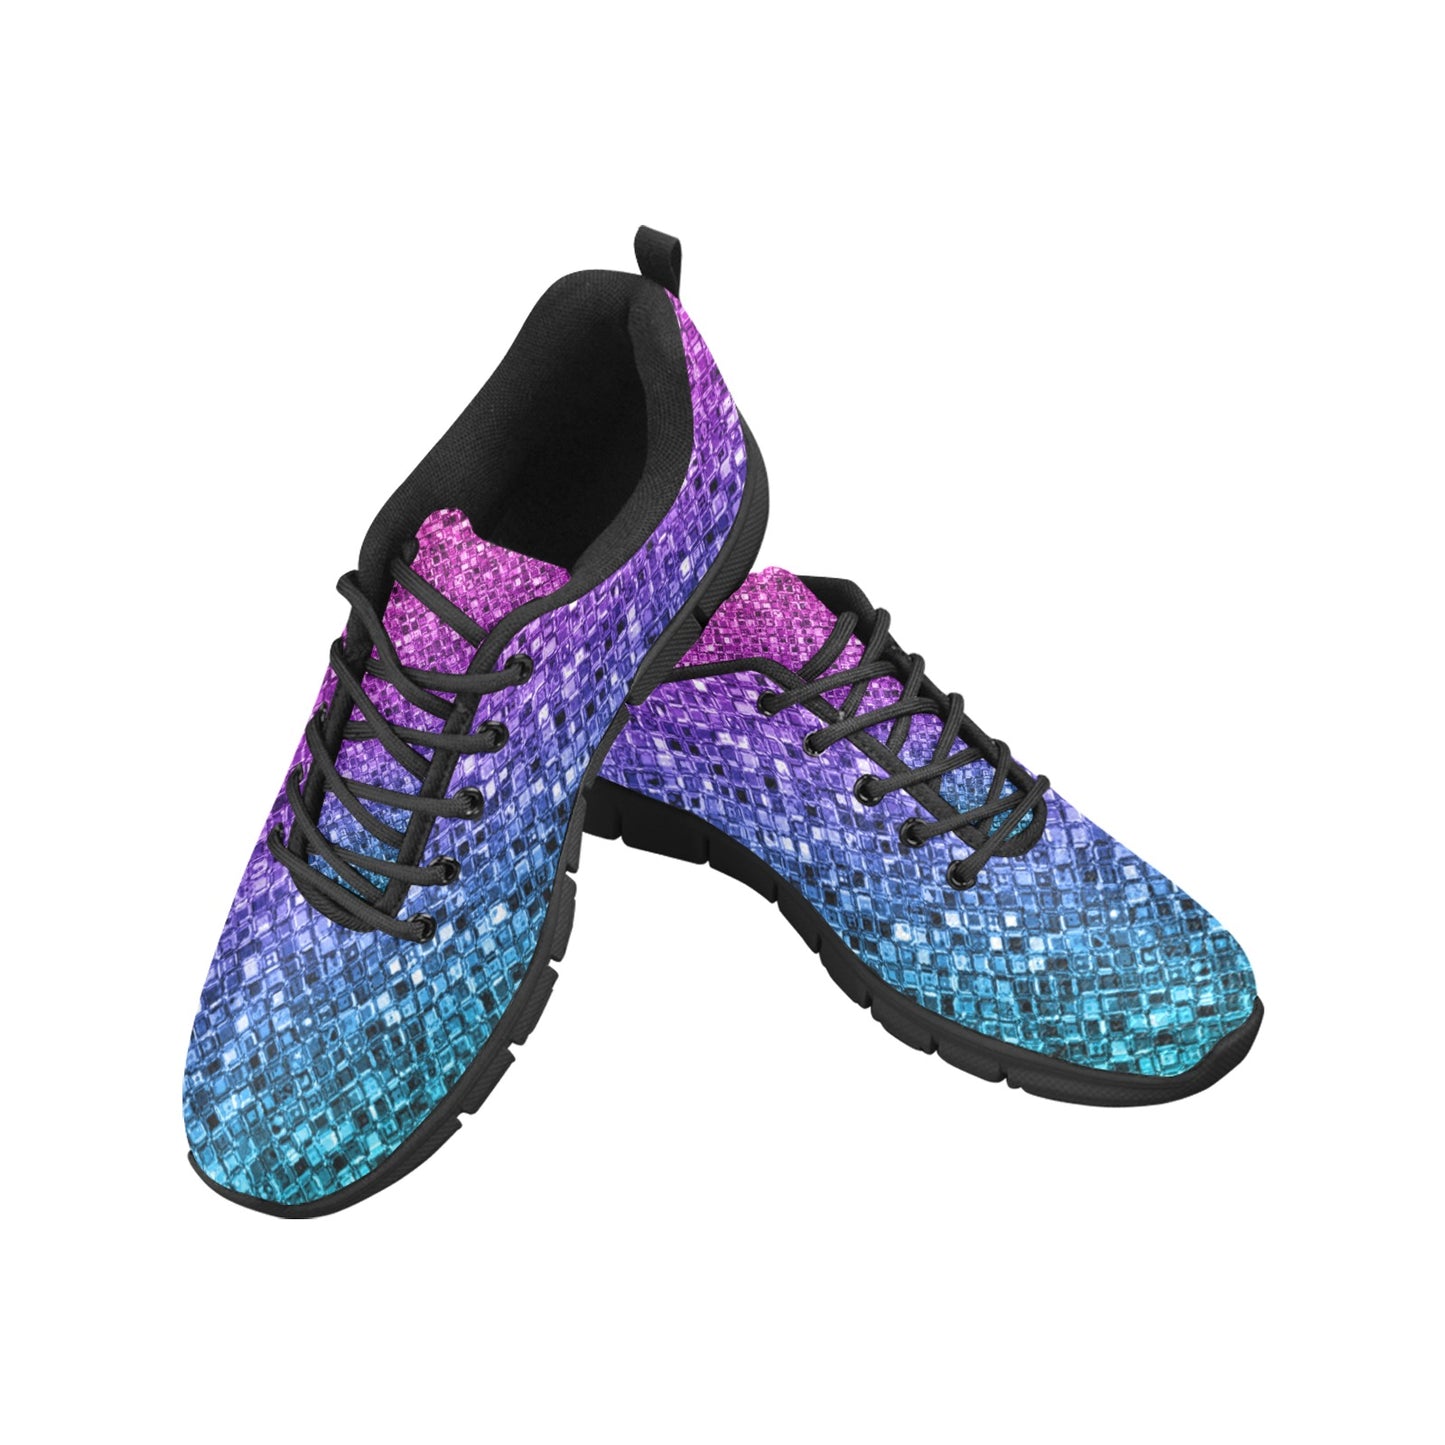 Women's Breathable Purple Sparkle Sneakers